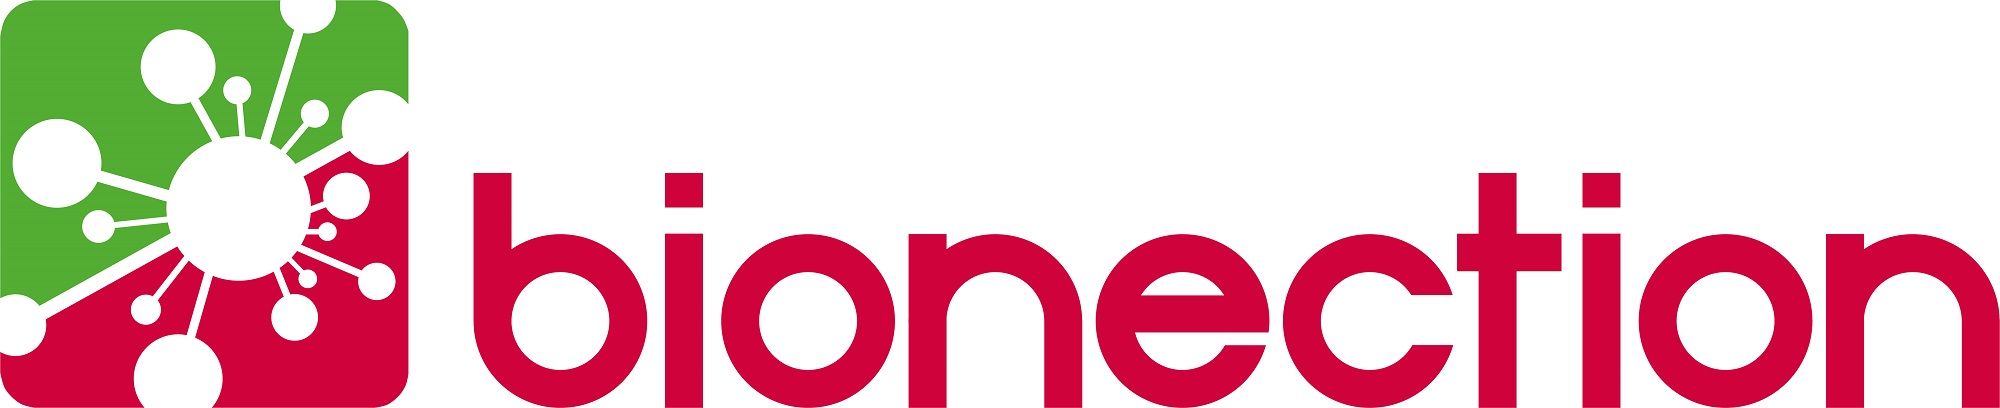 bionection Logo